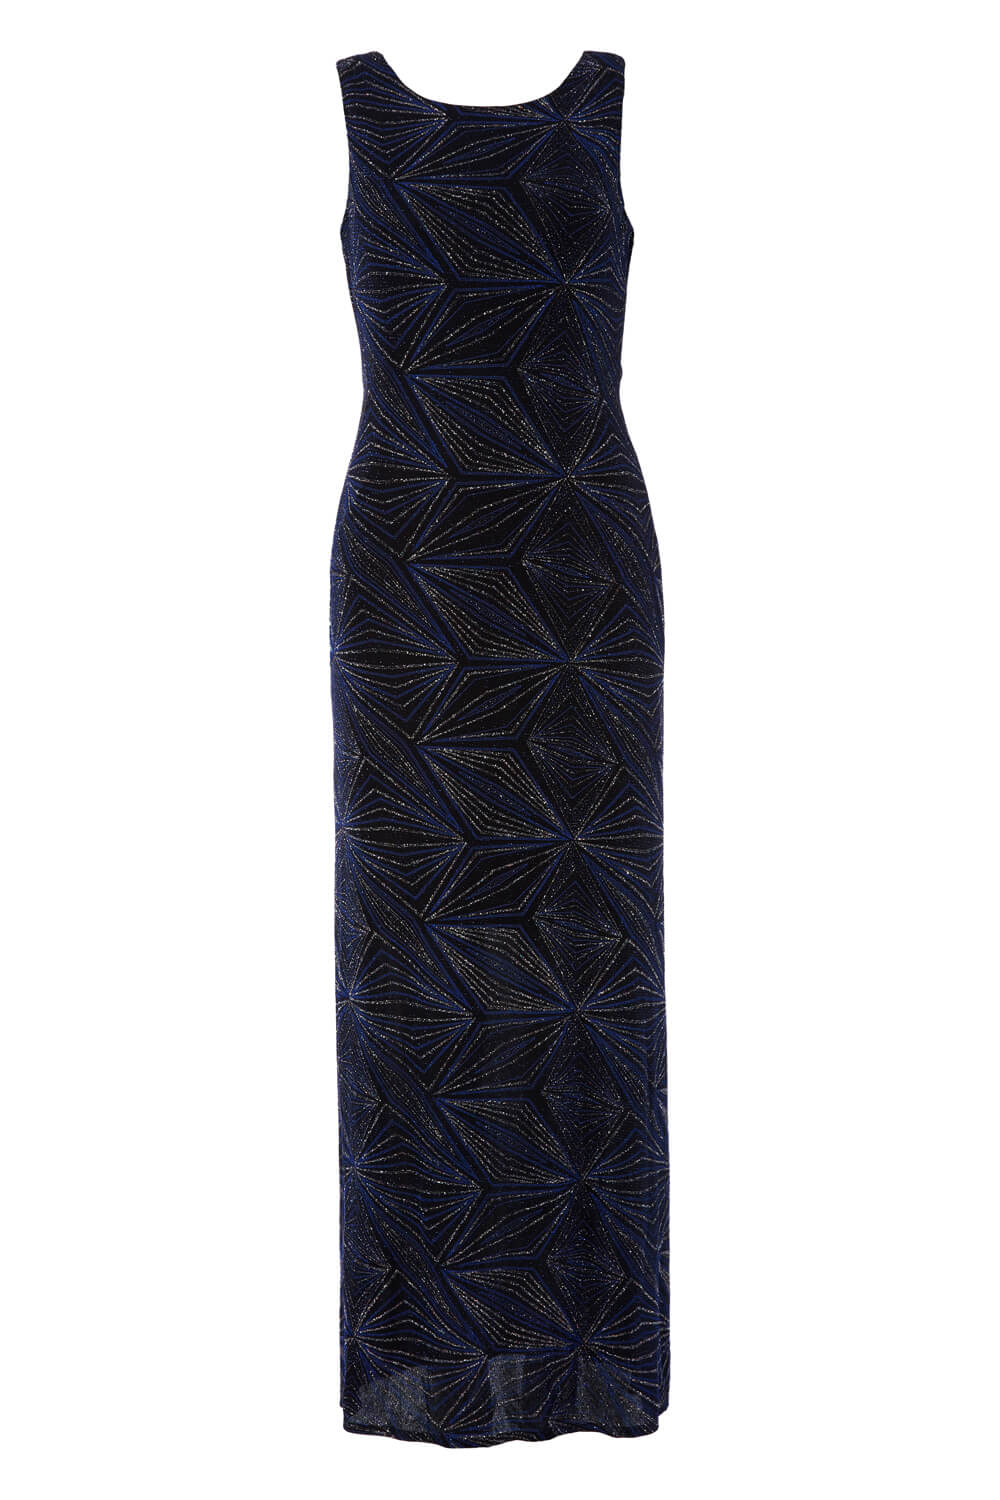 Blue Geometric Glitter Print Maxi Dress, Image 3 of 4